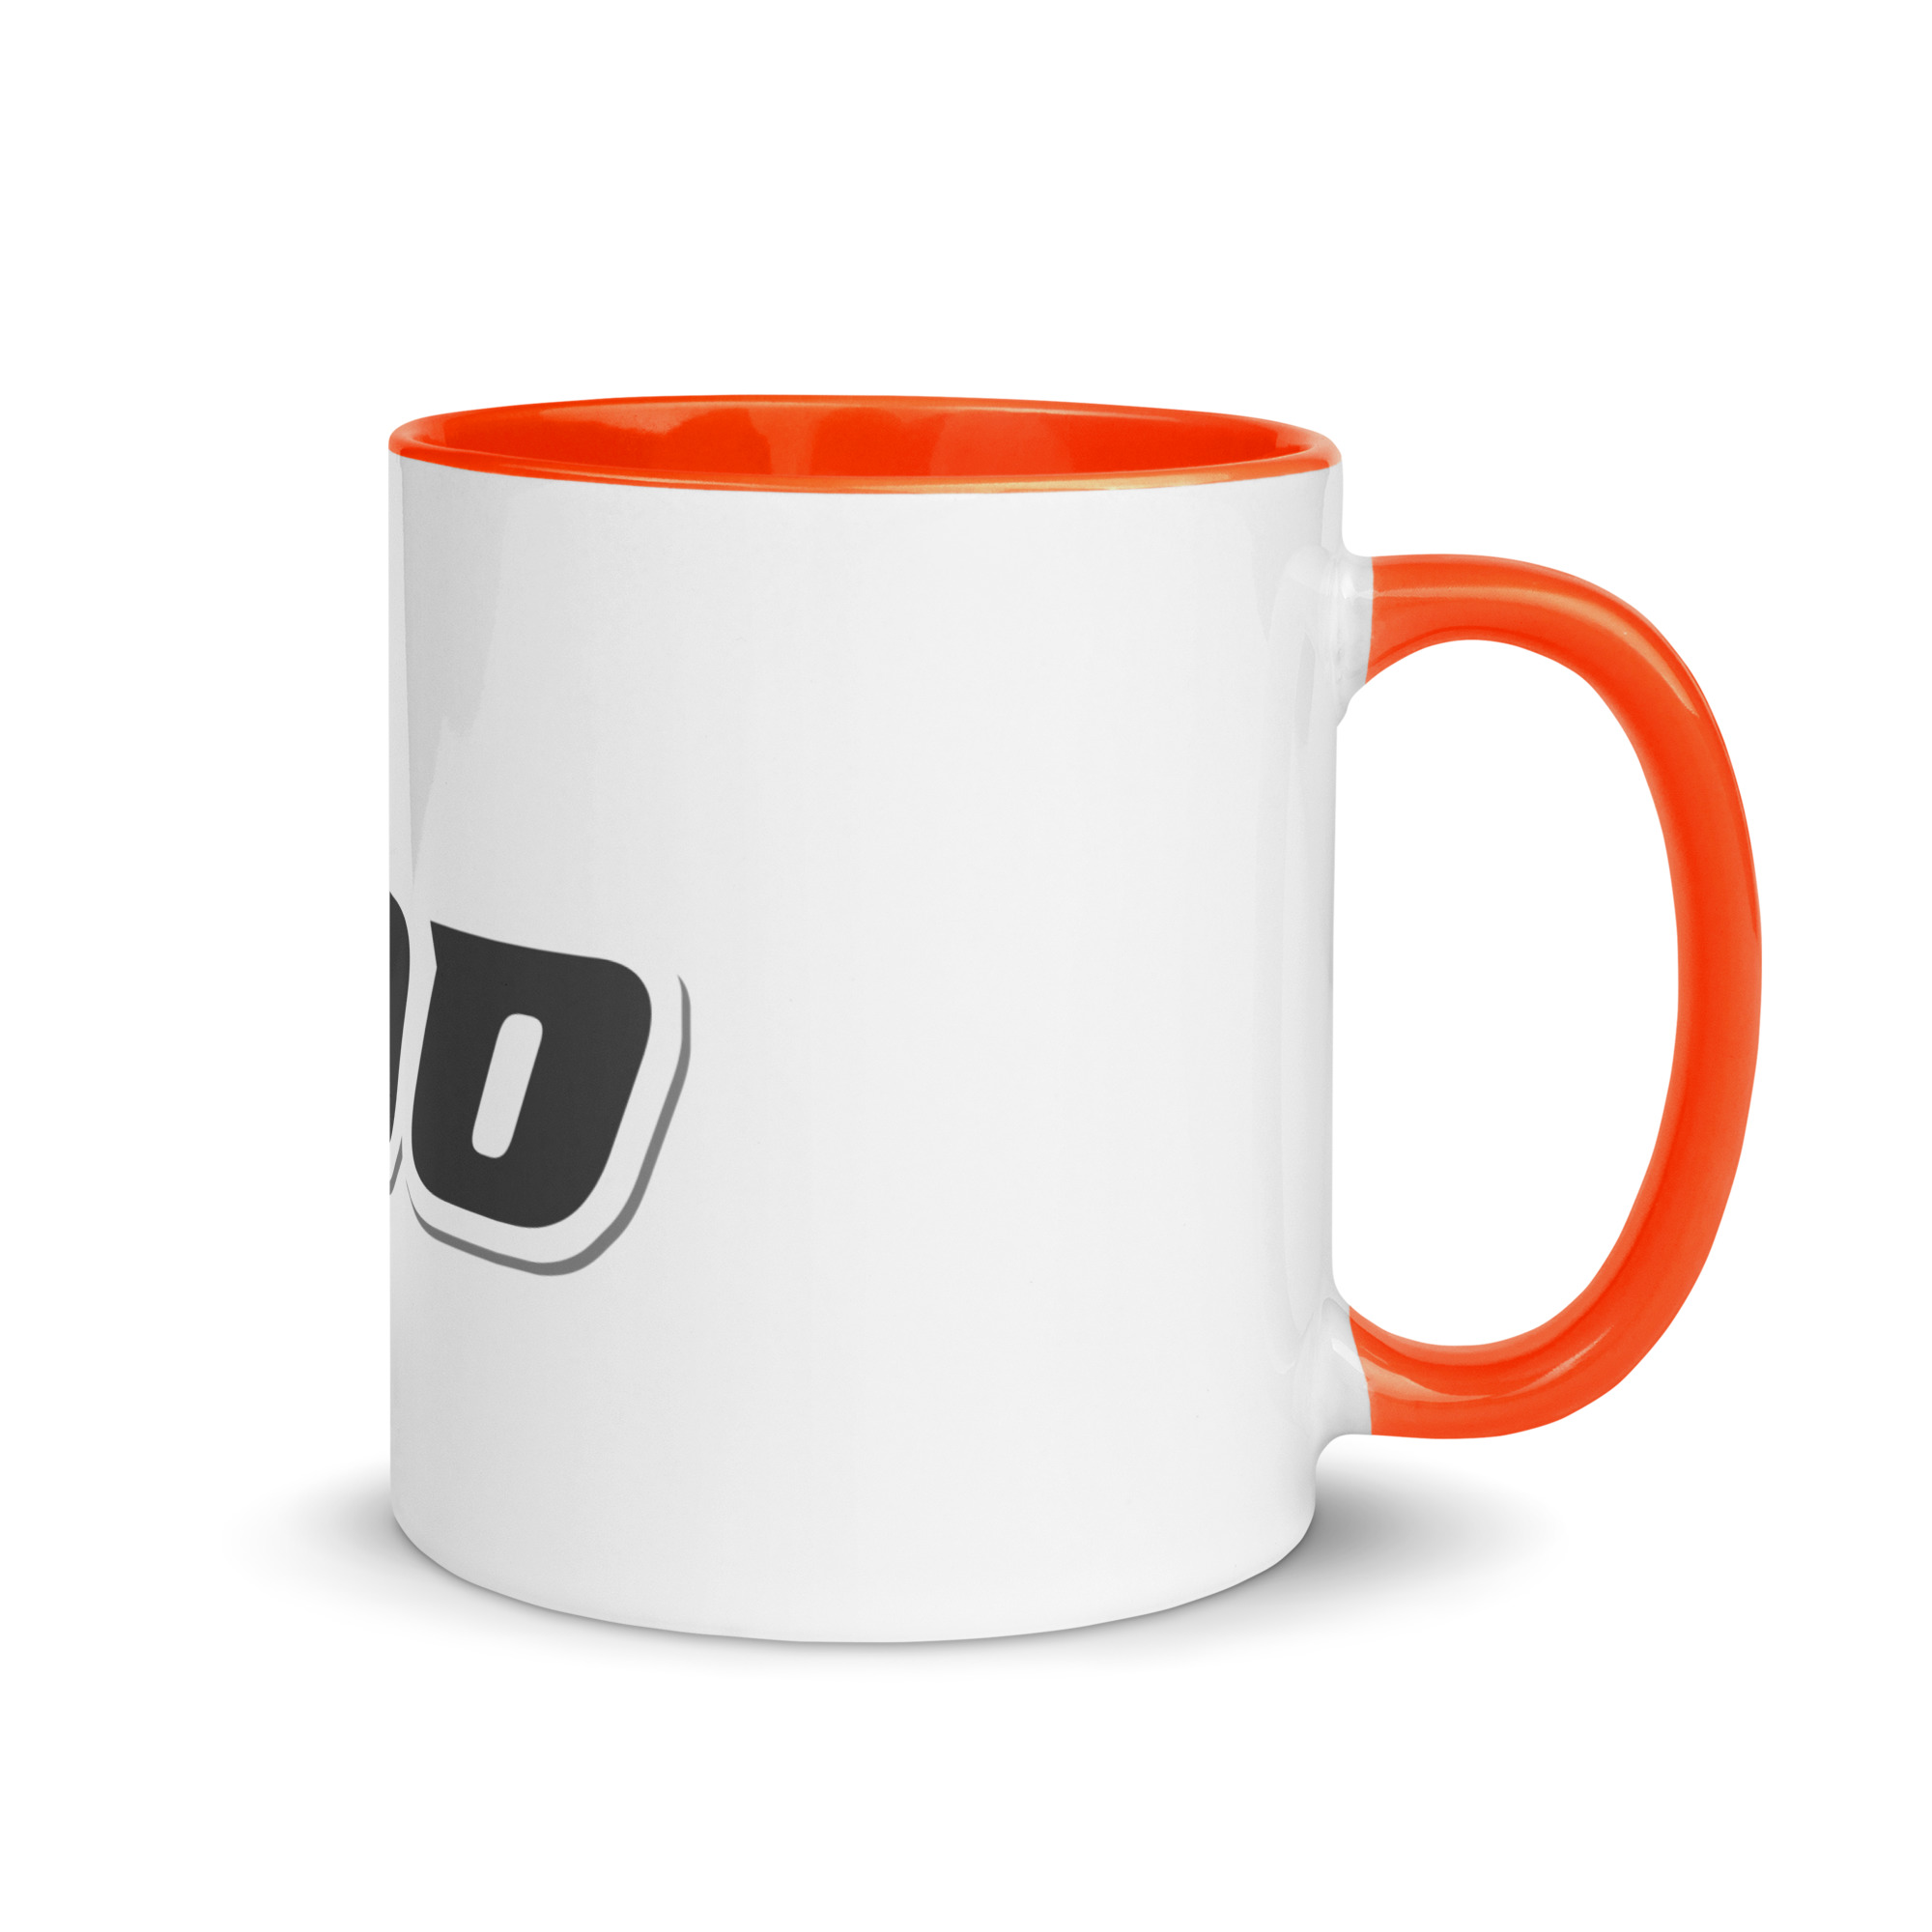 white-ceramic-mug-with-color-inside-orange-11-oz-right-6525b6484c632.jpg